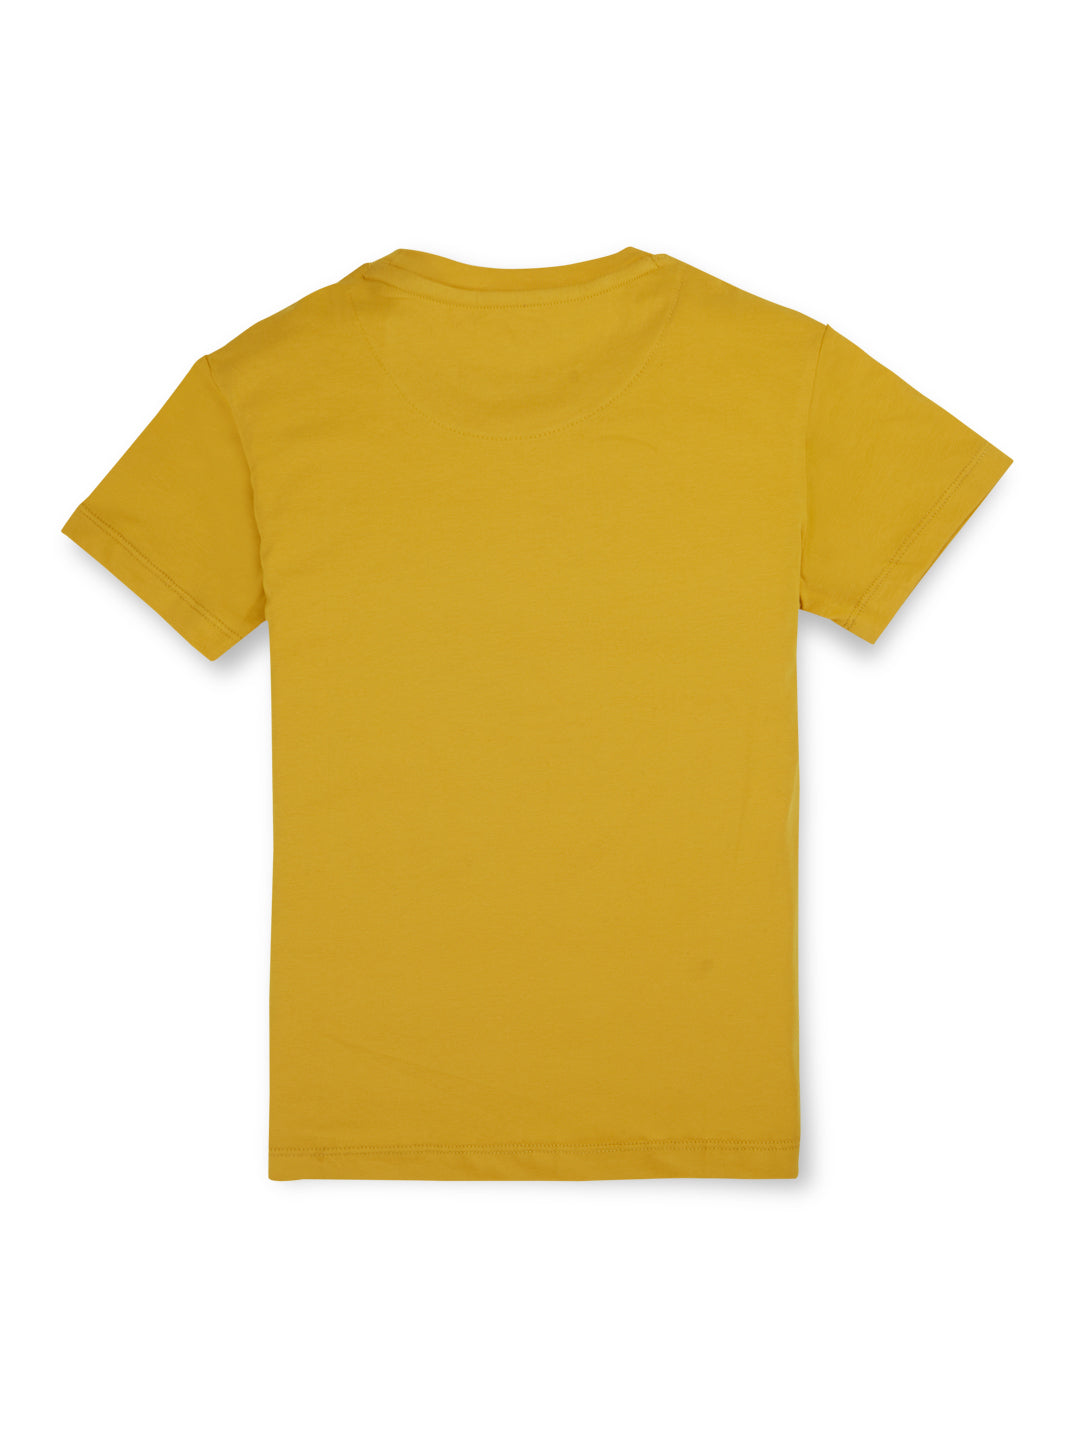 Boys Yellow Doodle Fun Vibes Cotton Round Neck Half Sleeve T-Shirt